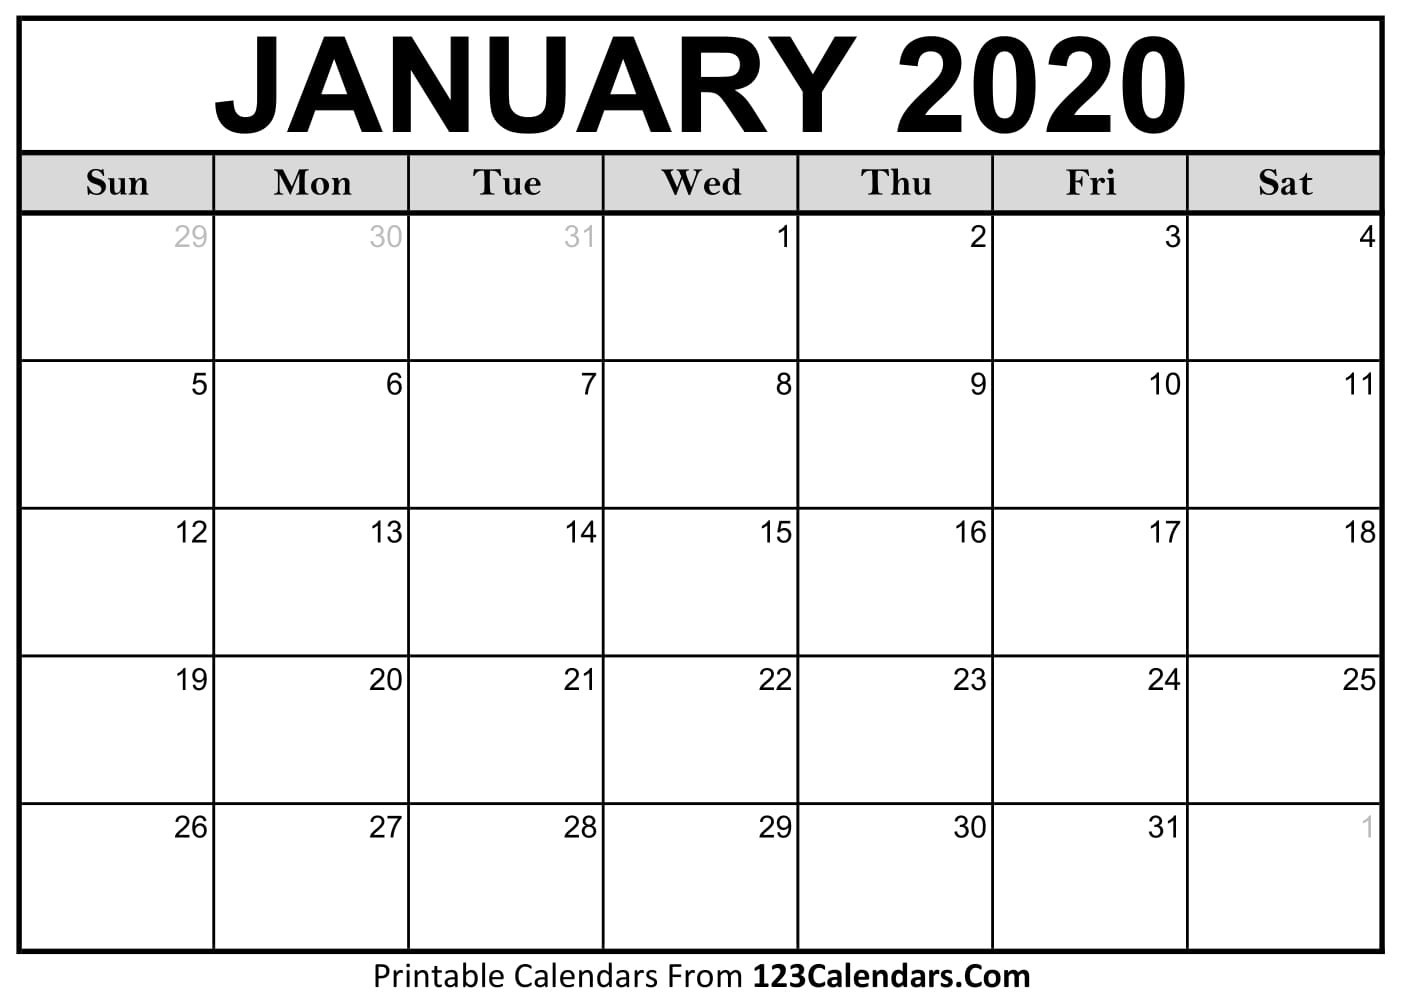 Free Printable Calendar | 123Calendars-Printable Monthly Calendar 2020